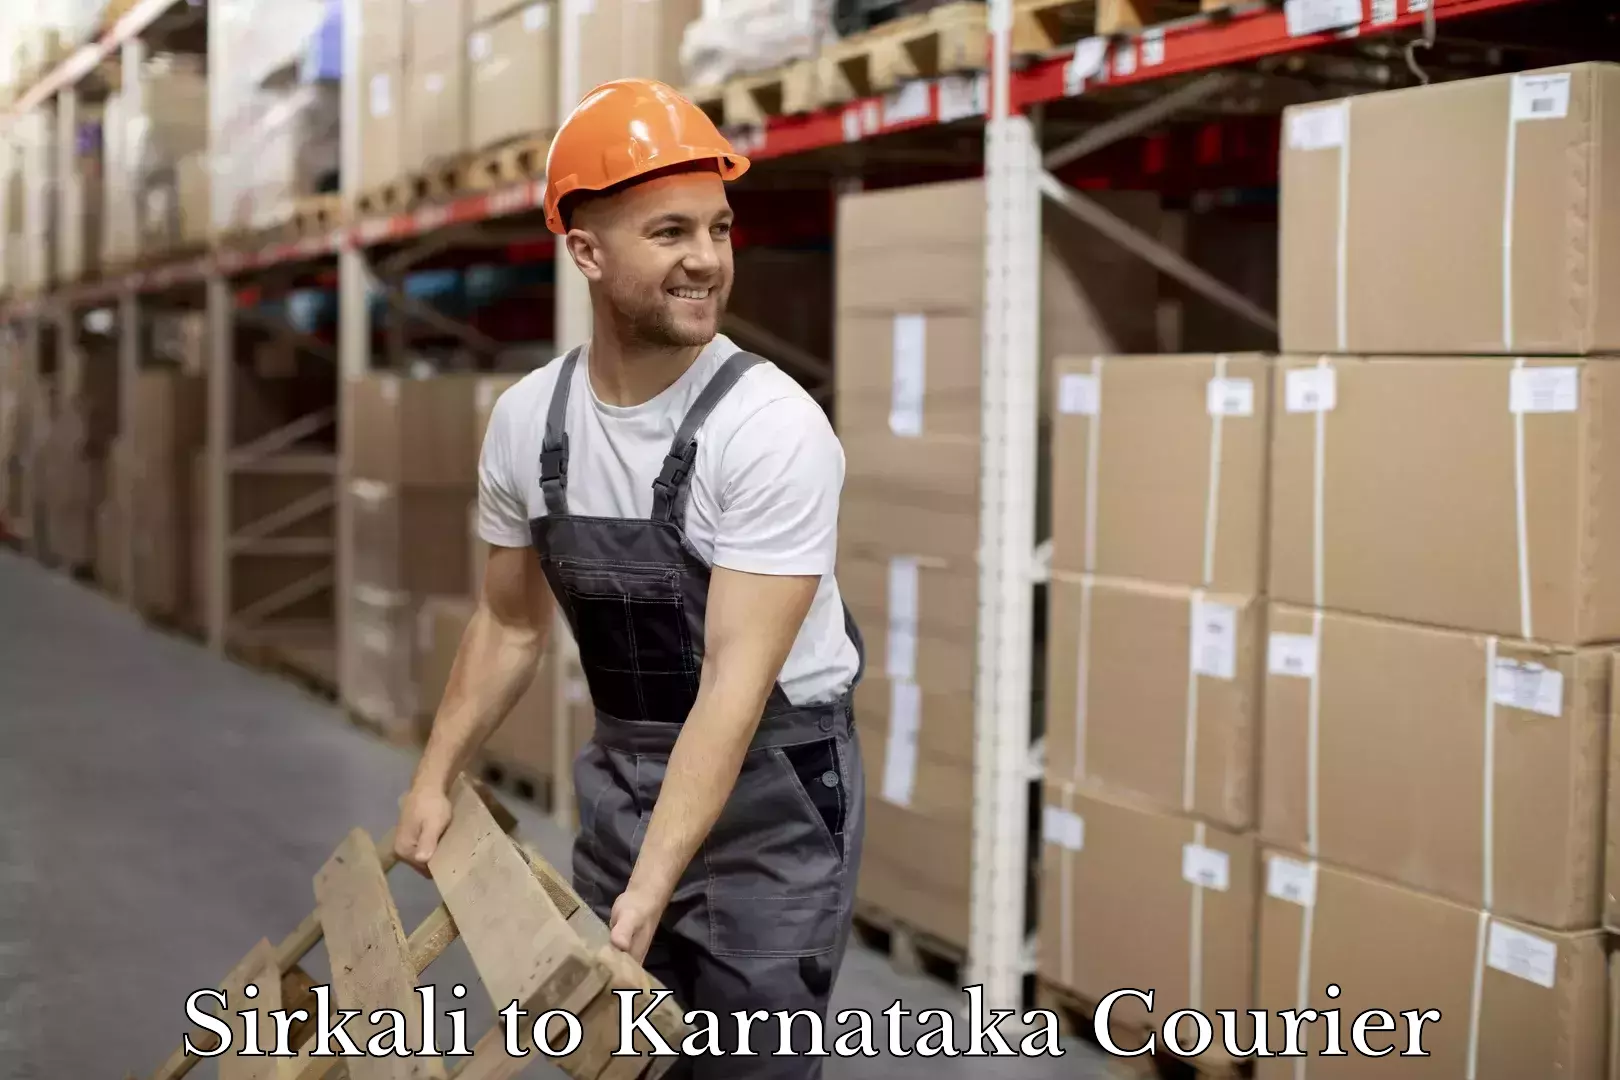 Subscription-based courier Sirkali to Karnataka